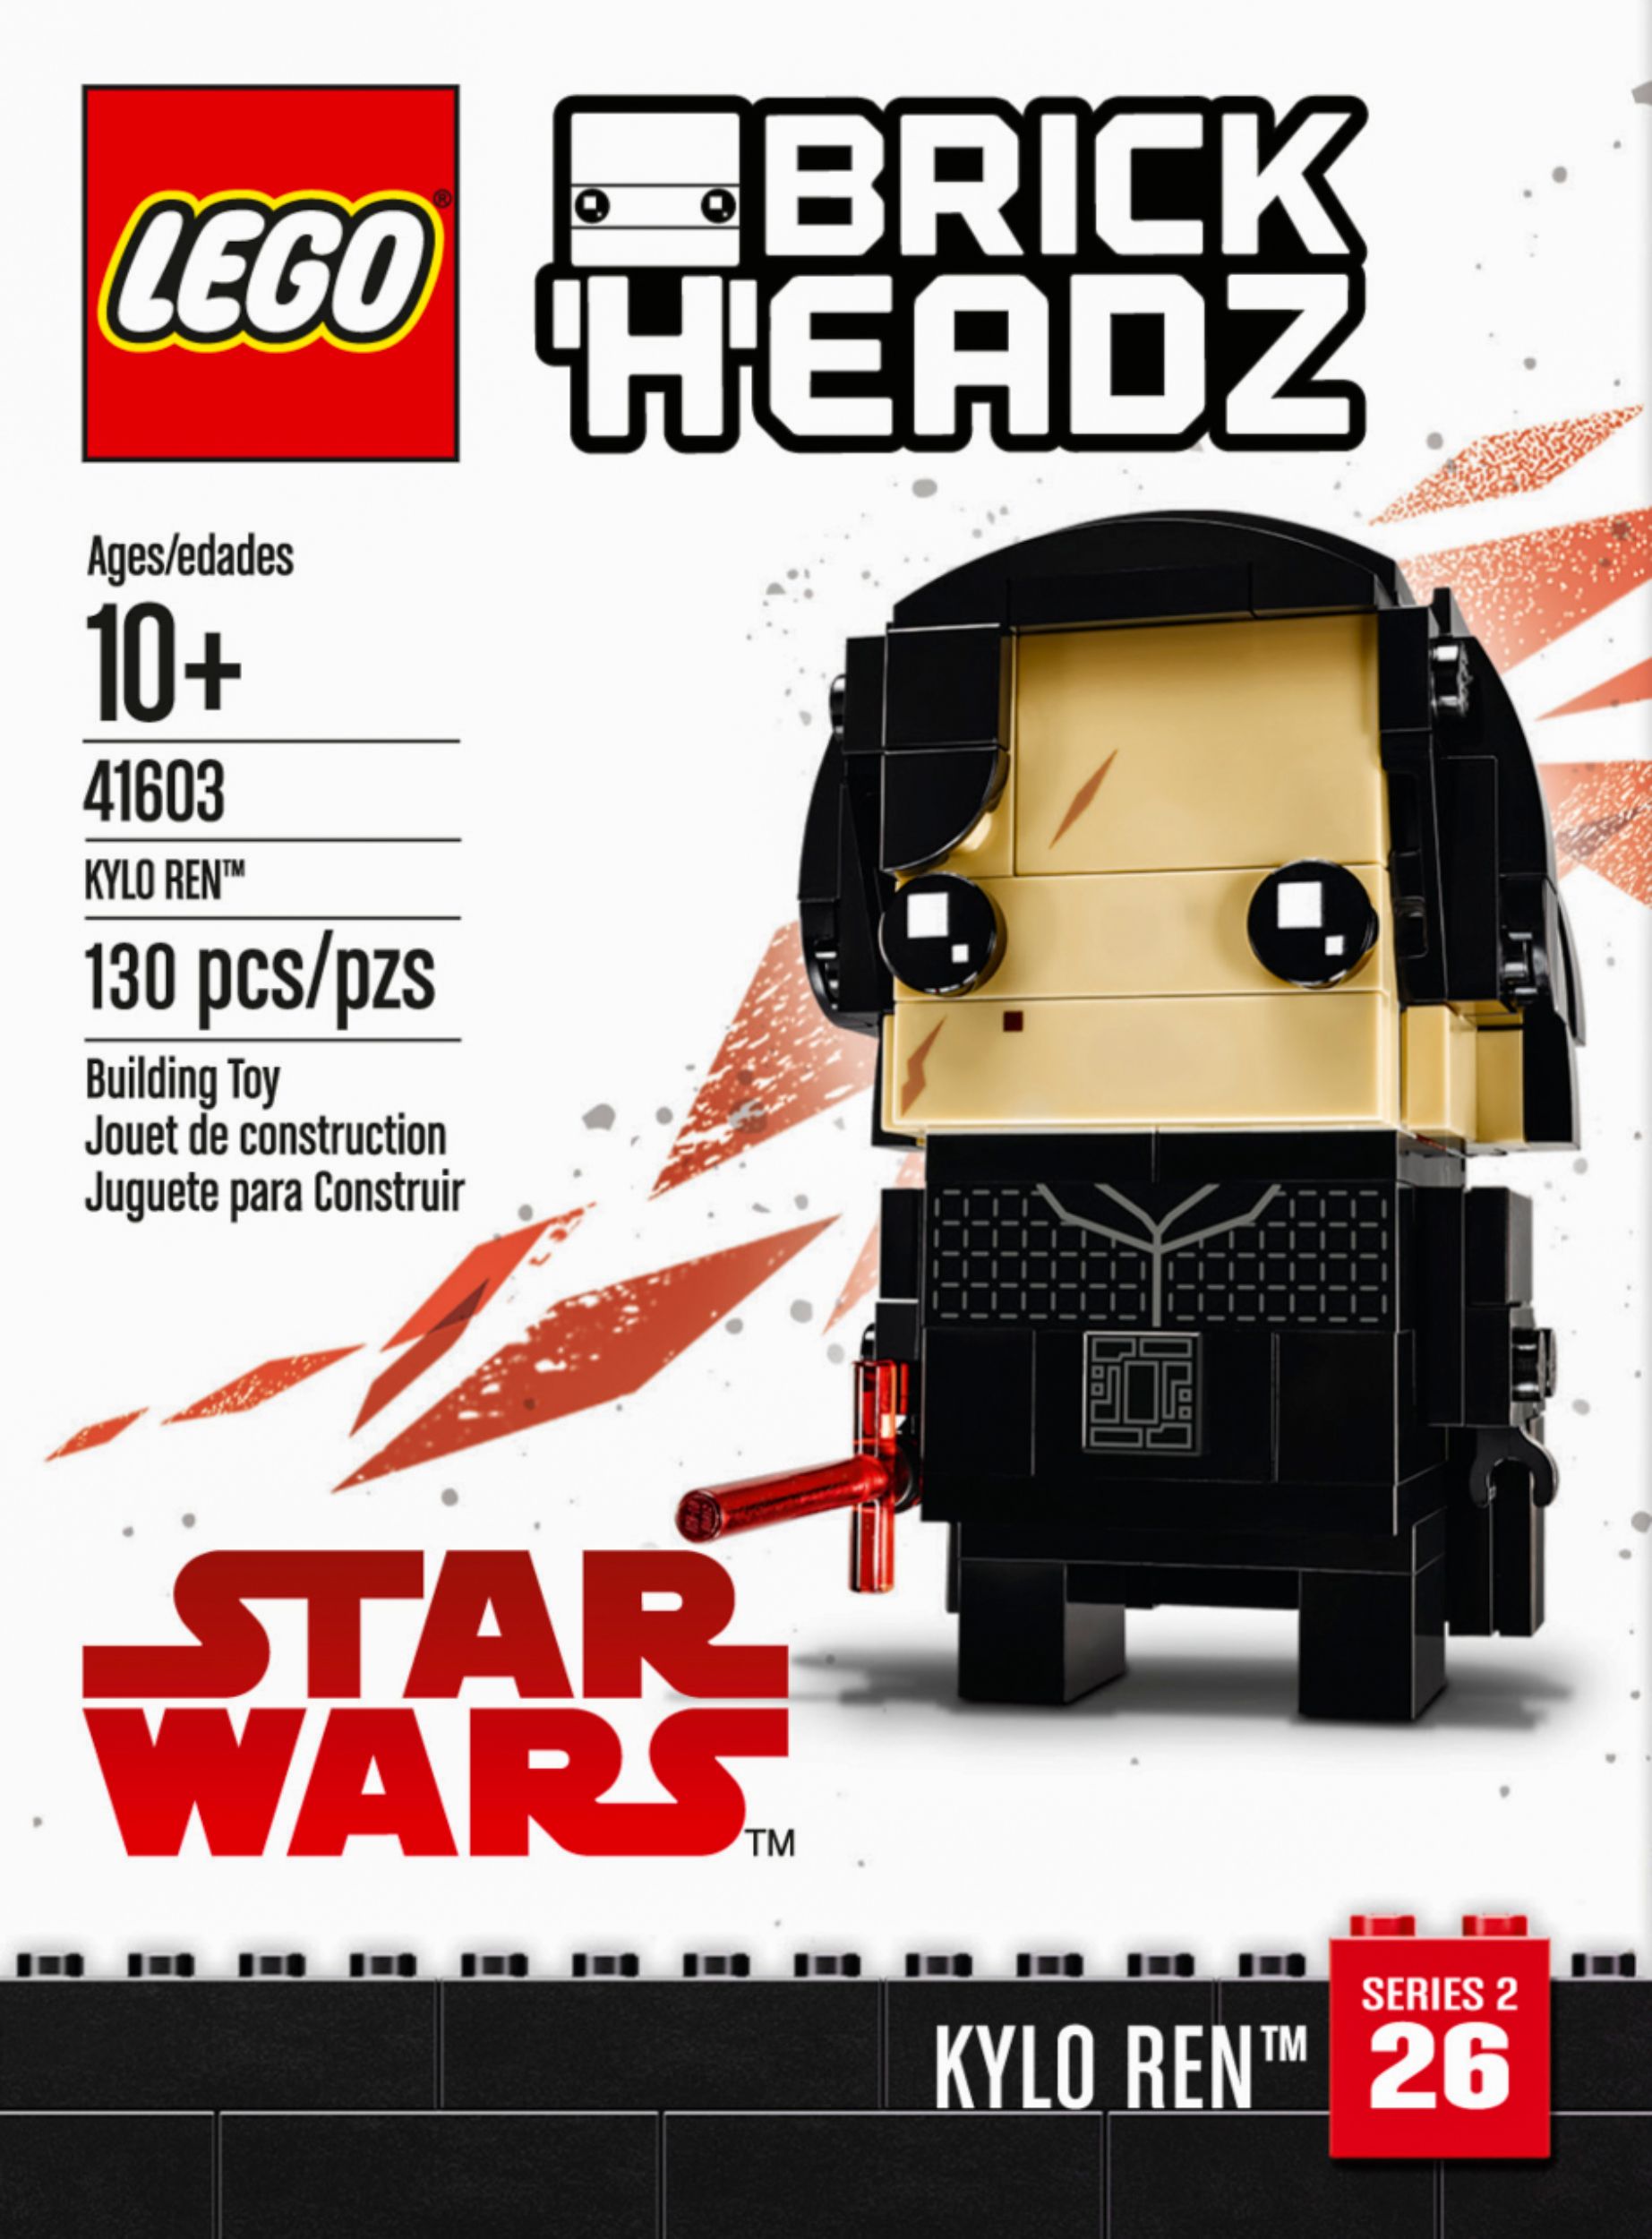 Træts webspindel Tage en risiko Kristendom Best Buy: LEGO BrickHeadz Star Wars Kylo Ren 41603 Black 6210189